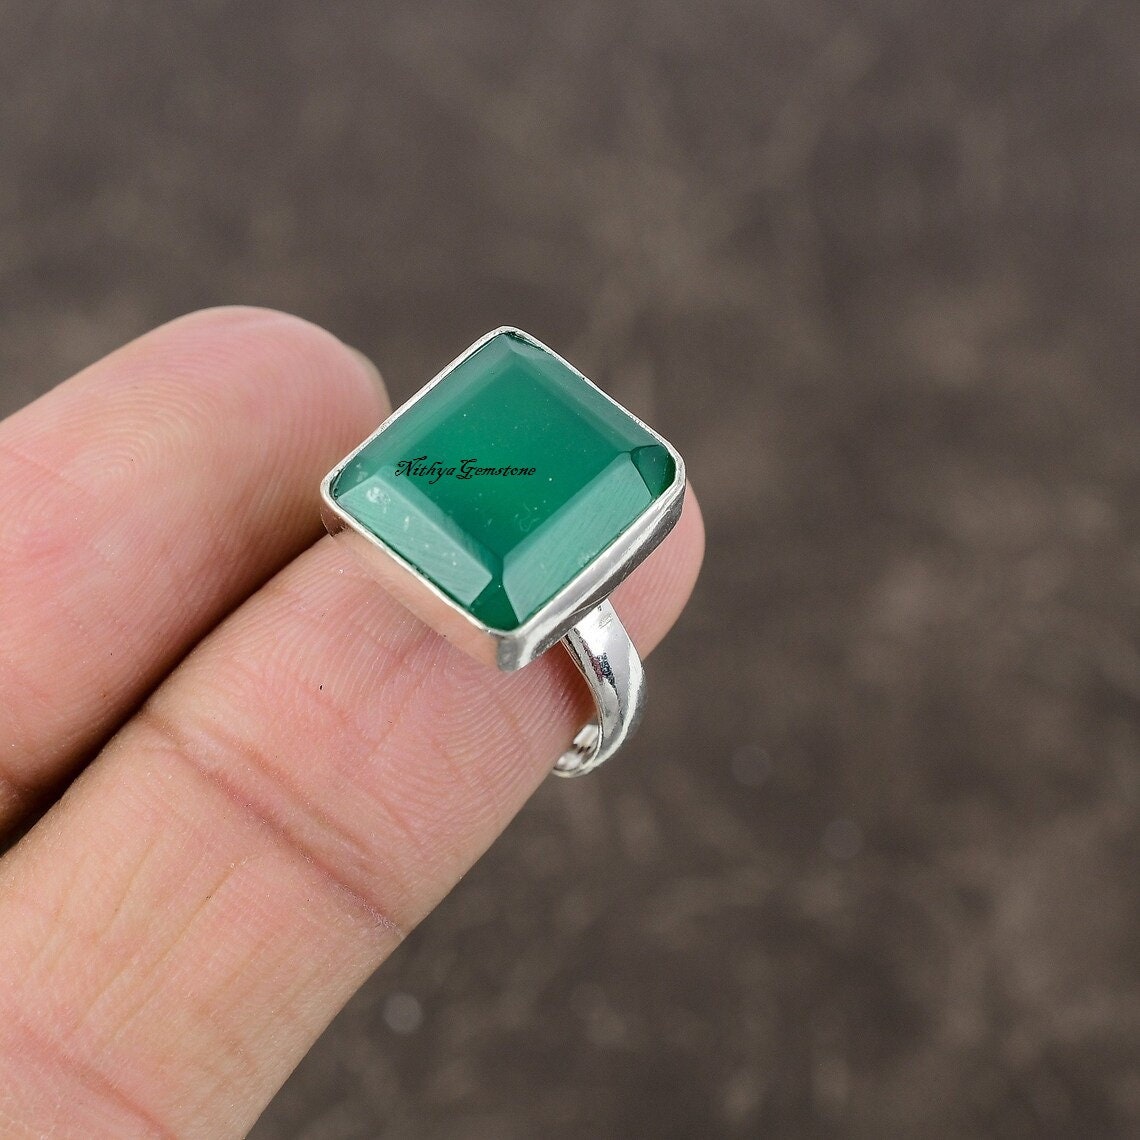 78% OFF on Barish Gems Emerald Panna Silver Ring on Snapdeal |  PaisaWapas.com